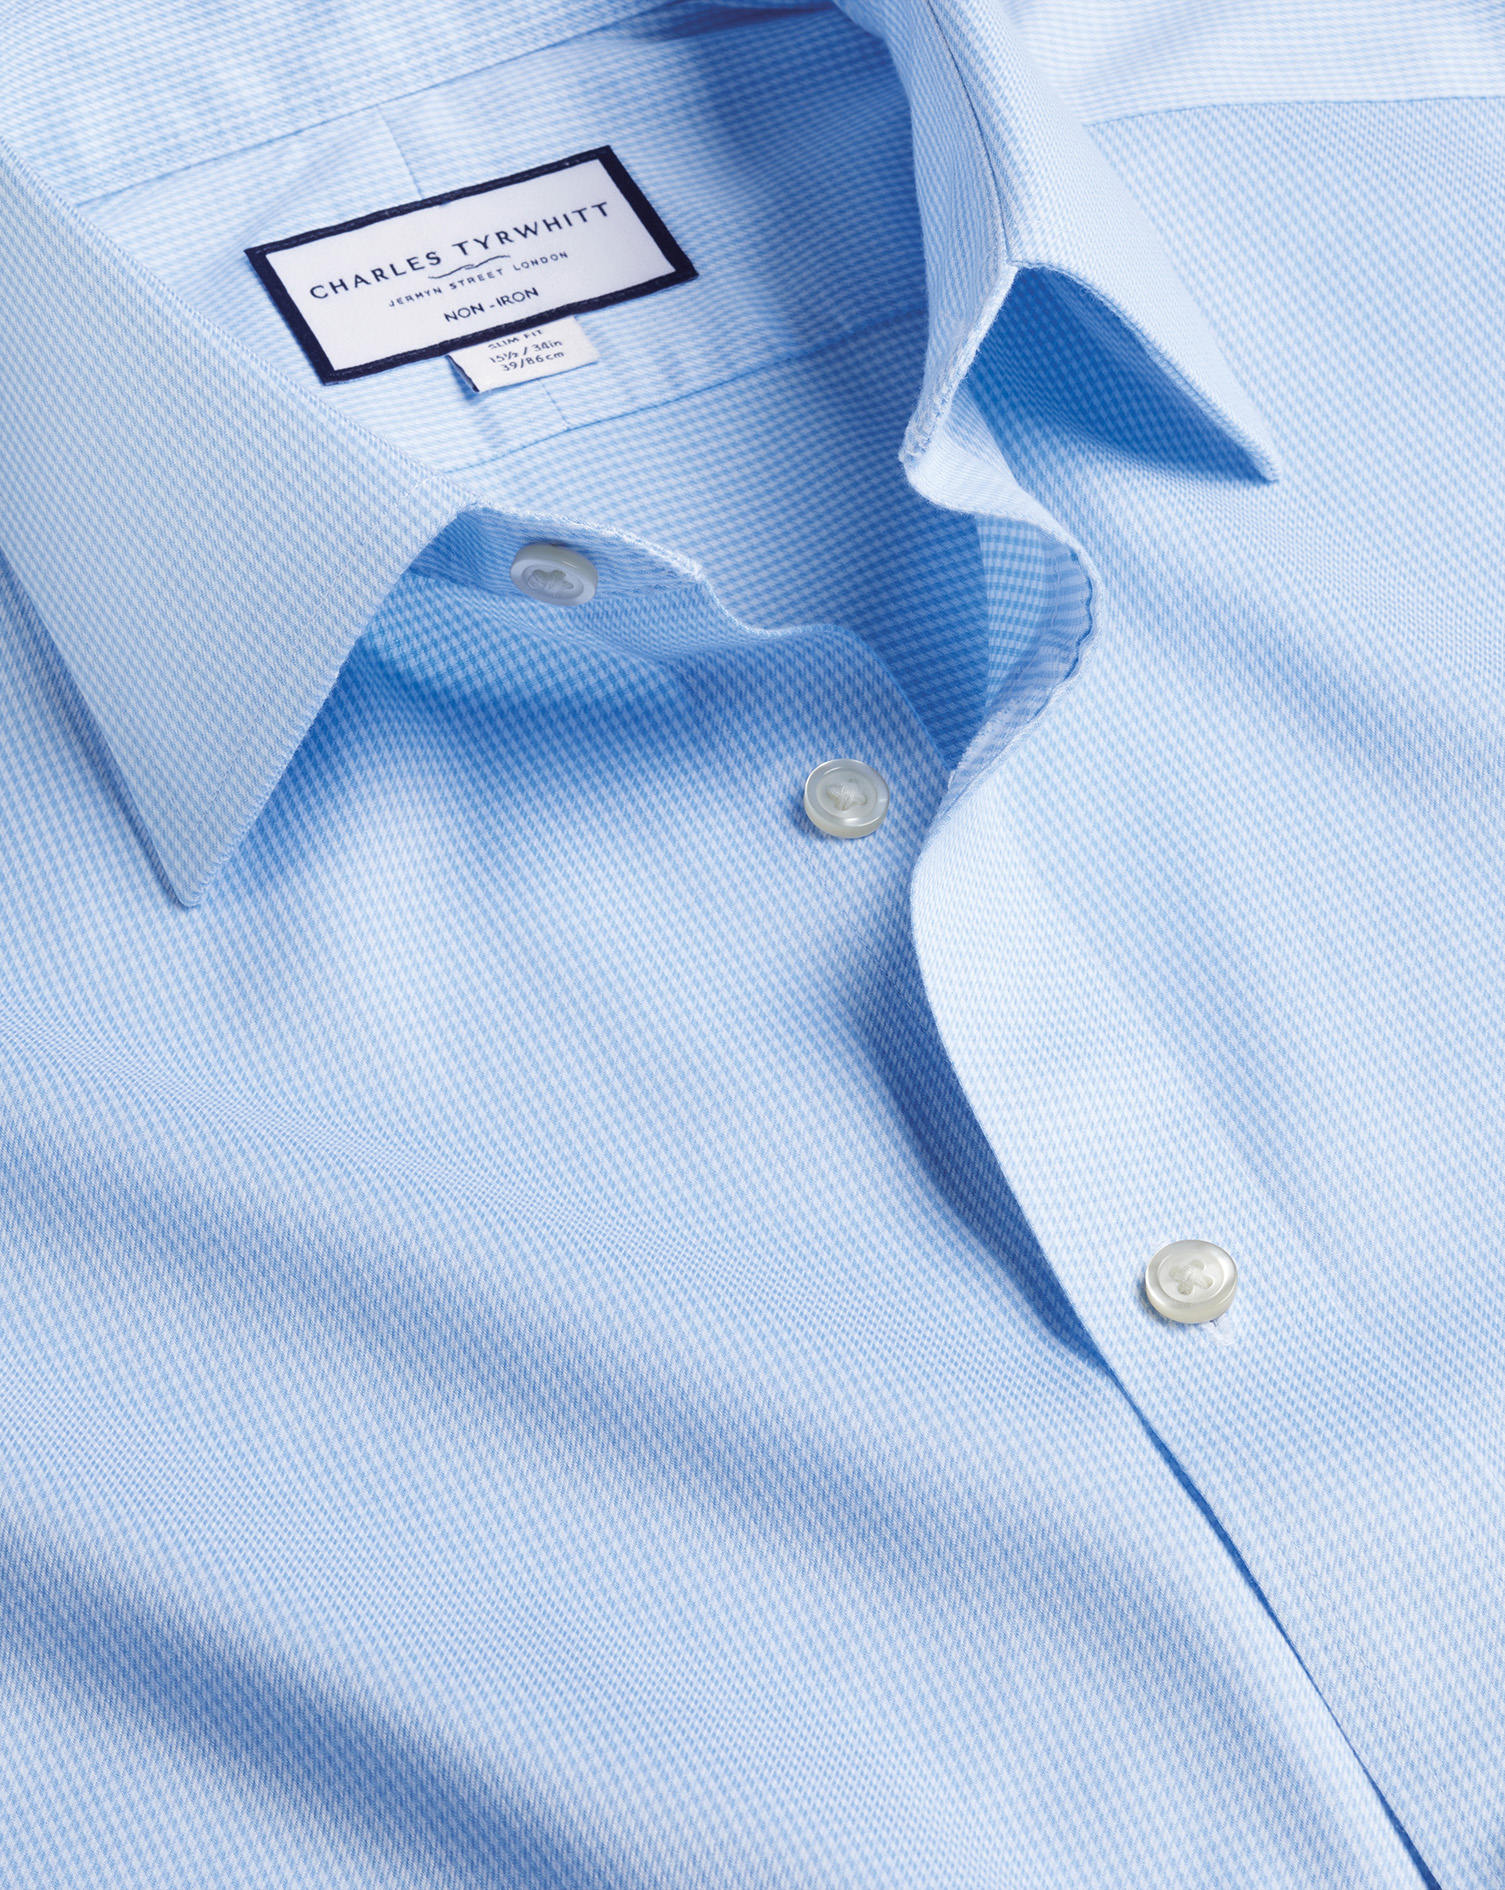 Men's Charles Tyrwhitt Non-Iron Puppytooth Dress Shirt - Sky Blue French Cuff Size XL Cotton
